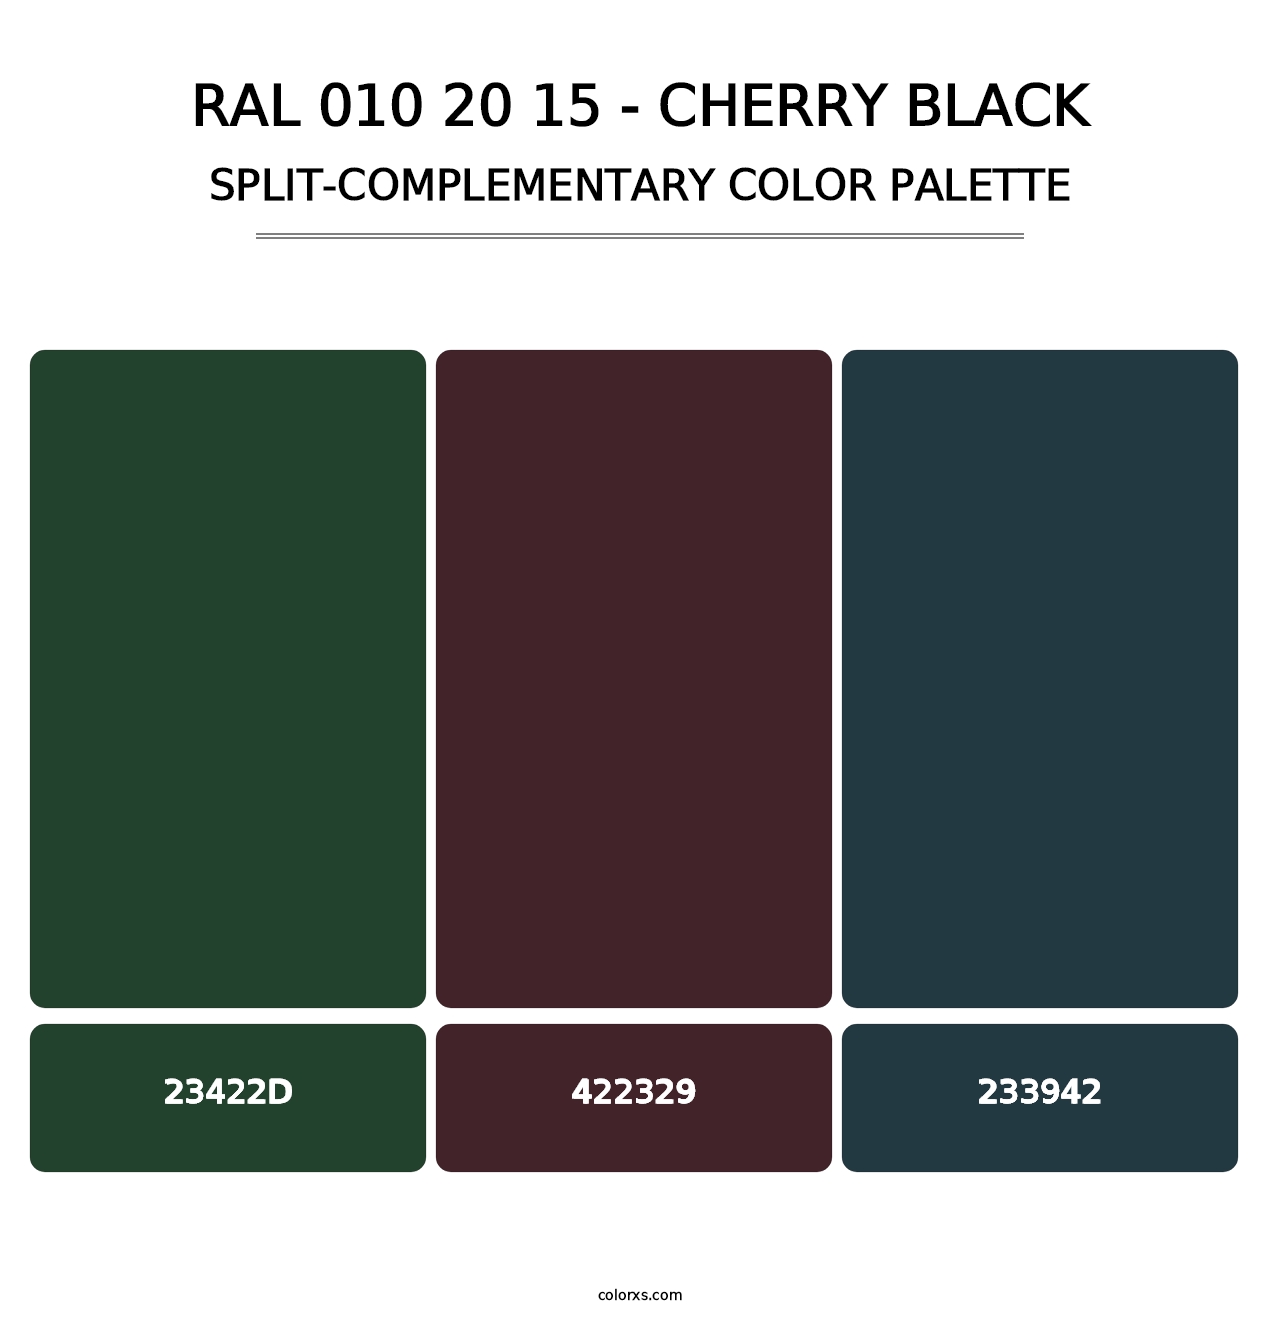 RAL 010 20 15 - Cherry Black - Split-Complementary Color Palette